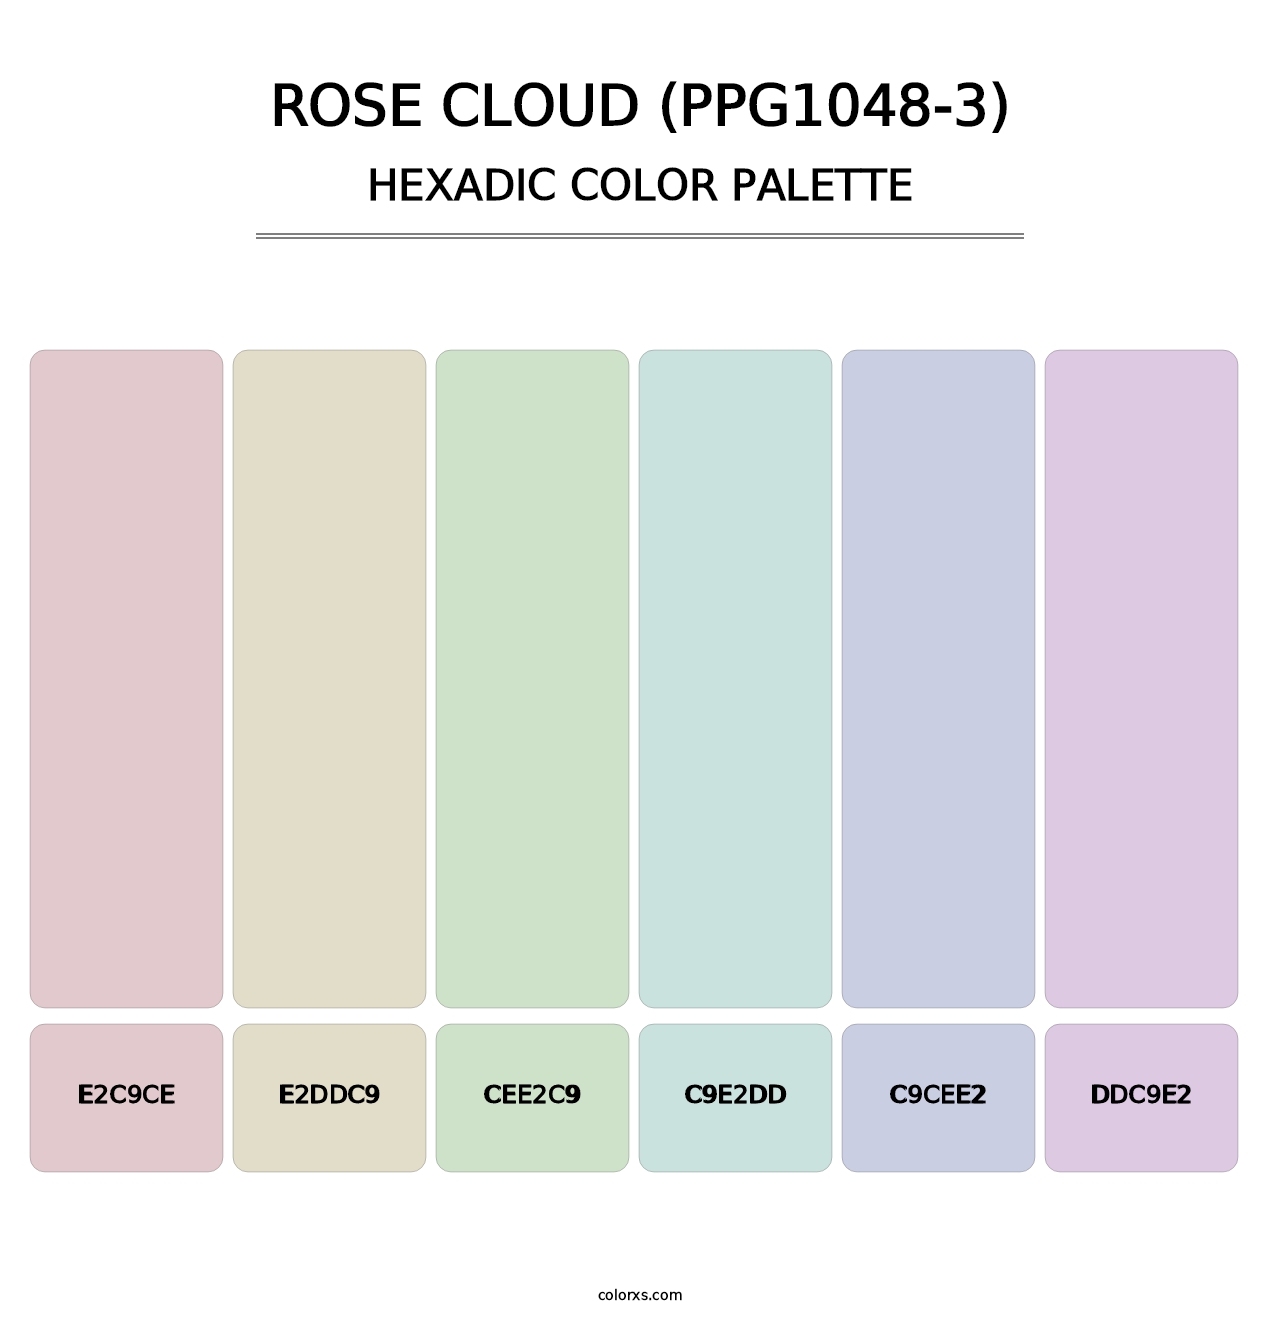 Rose Cloud (PPG1048-3) - Hexadic Color Palette